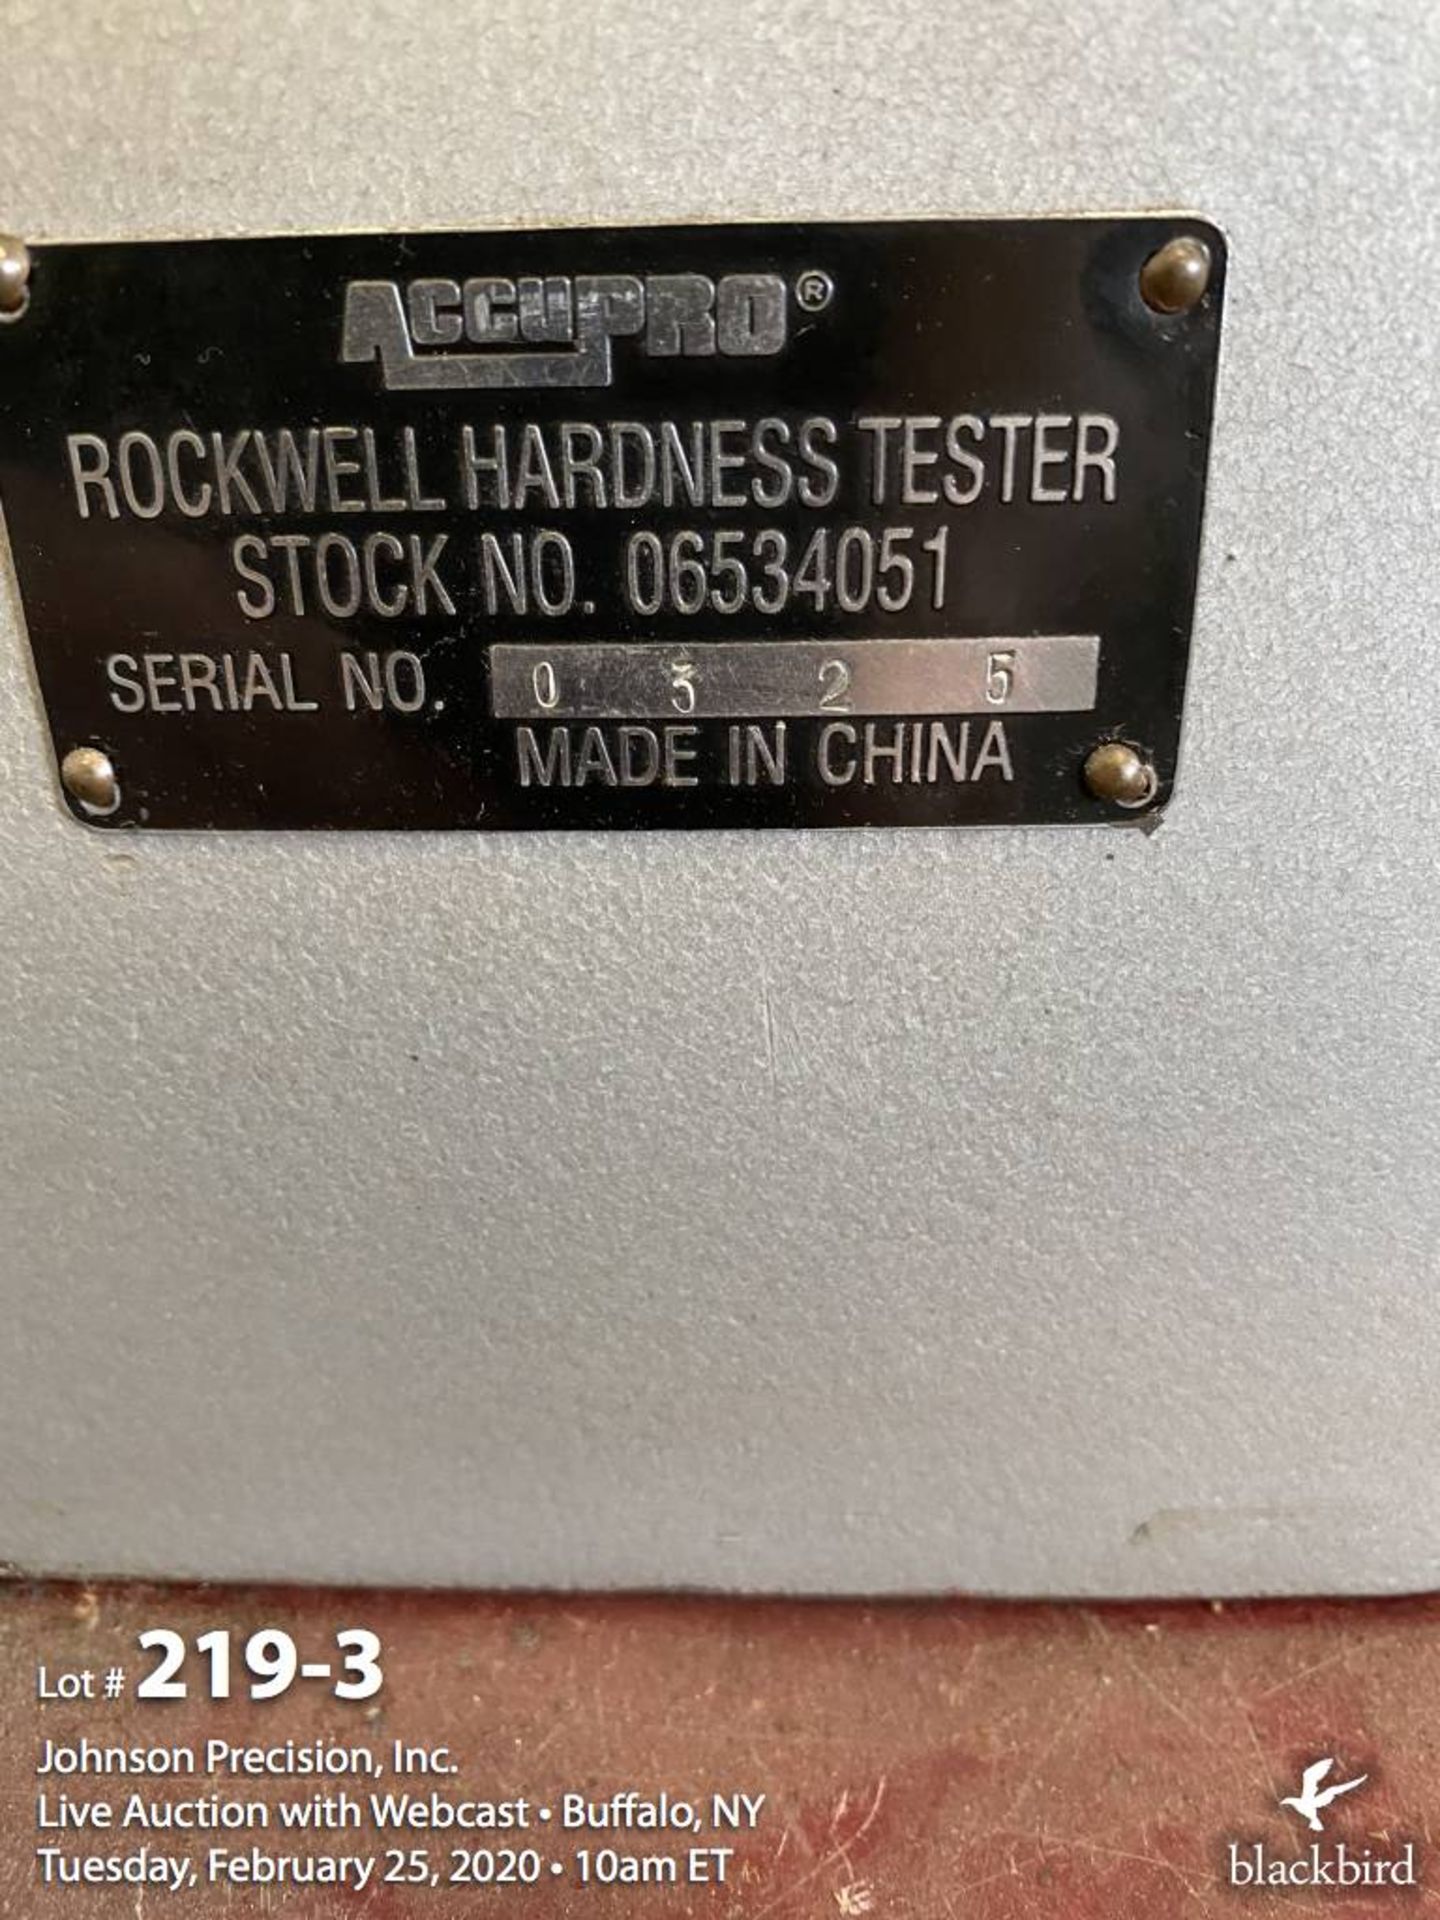 Accupro Rockwell hardness tester - Image 3 of 3